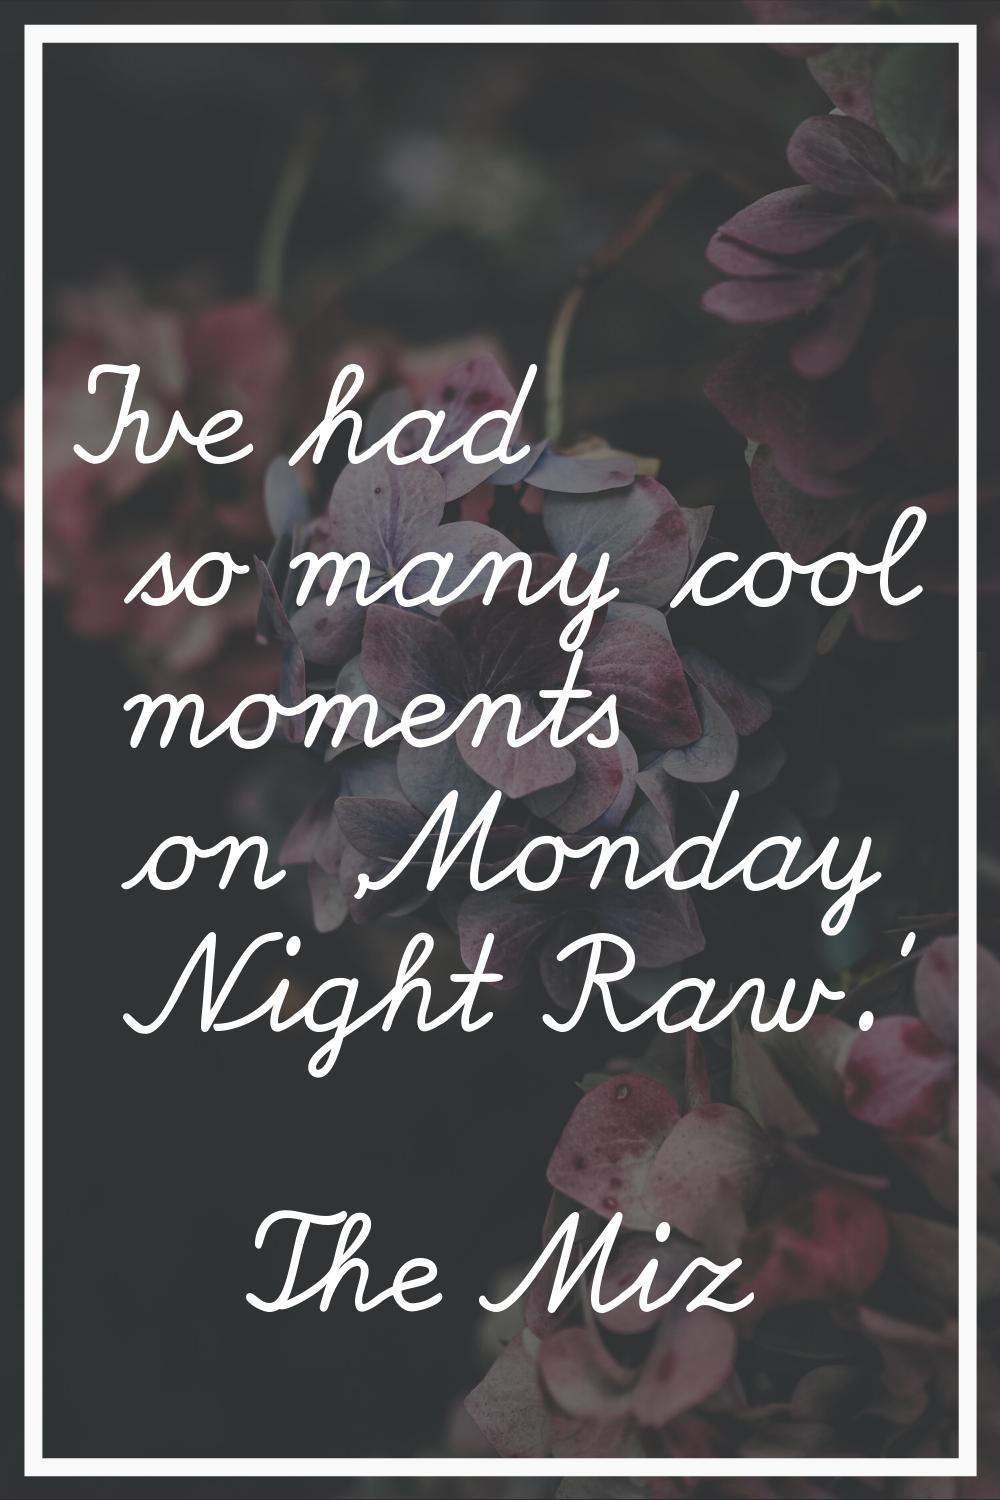 I've had so many cool moments on 'Monday Night Raw.'